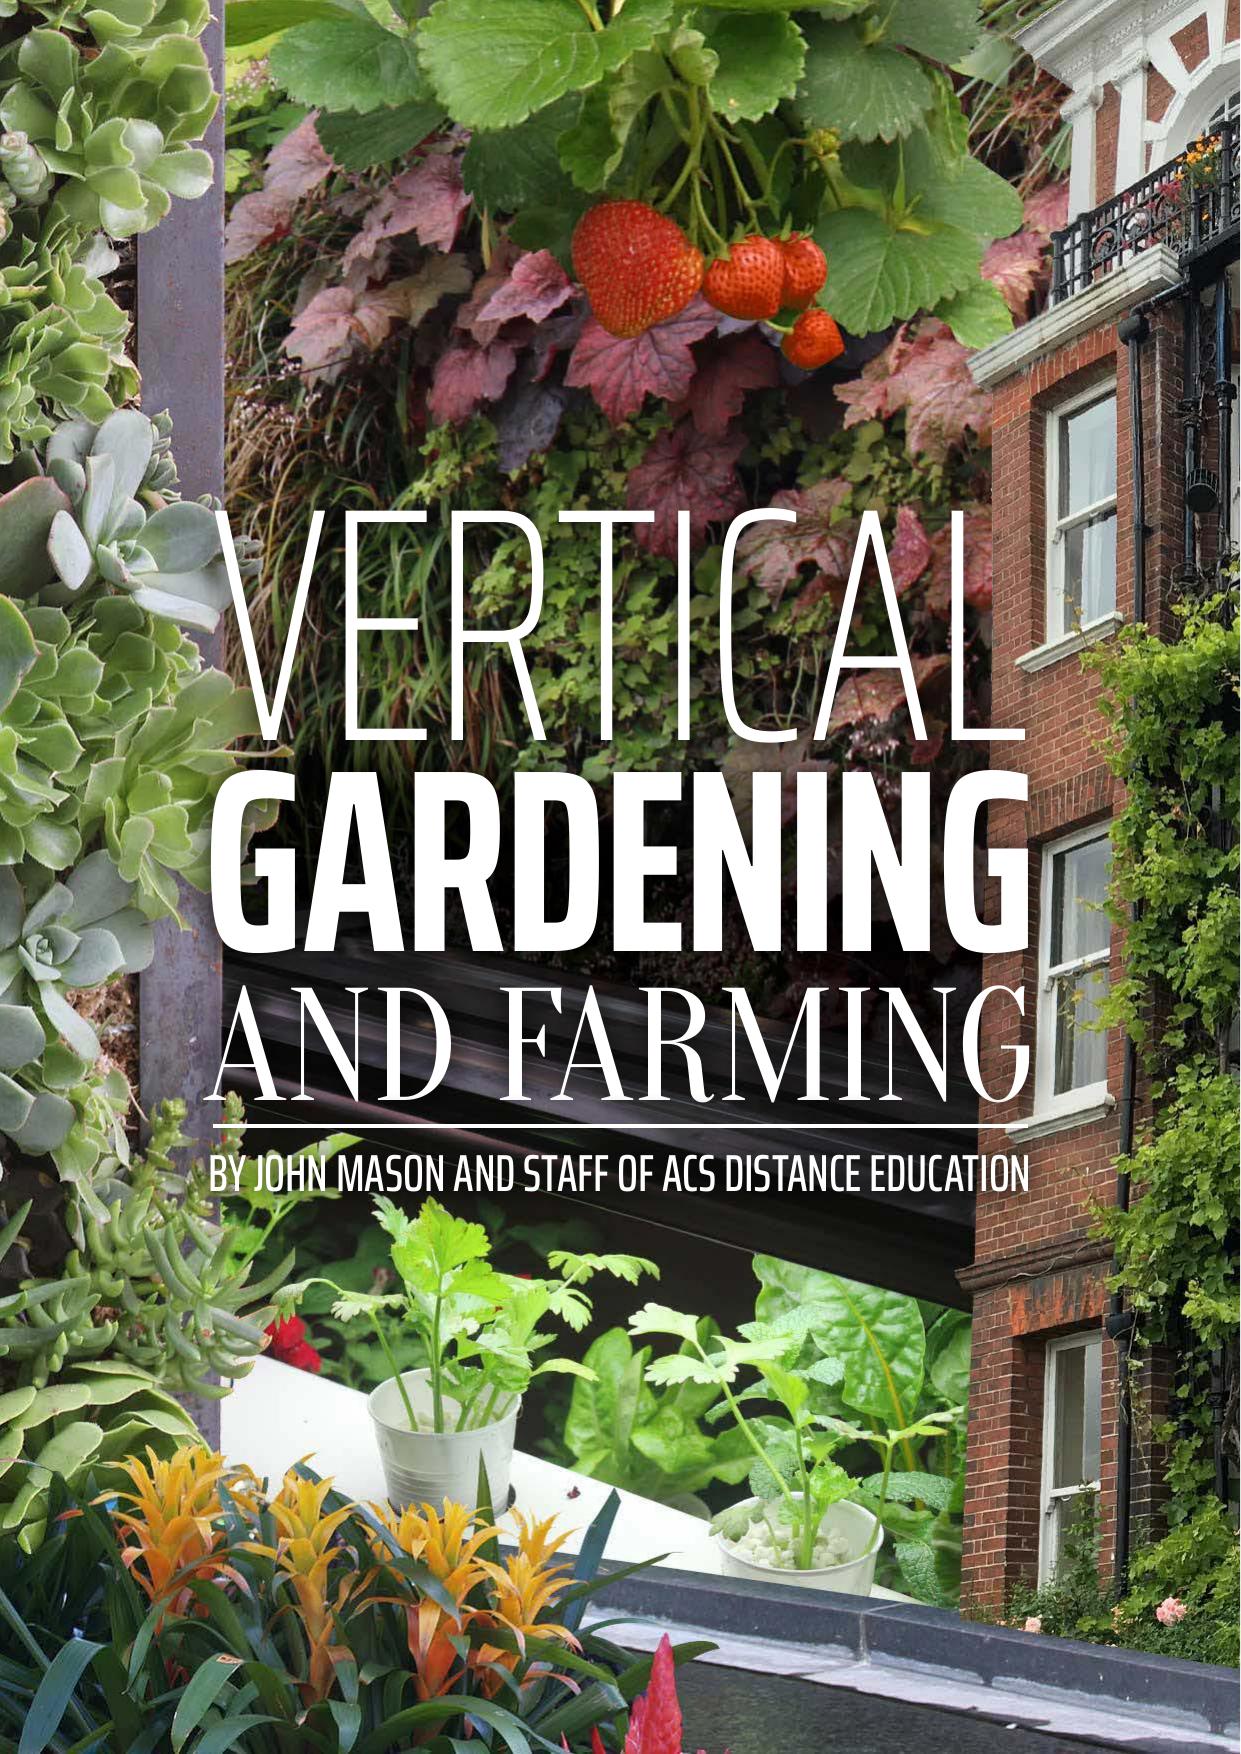 Vertical Gardening and Farming by John Mason